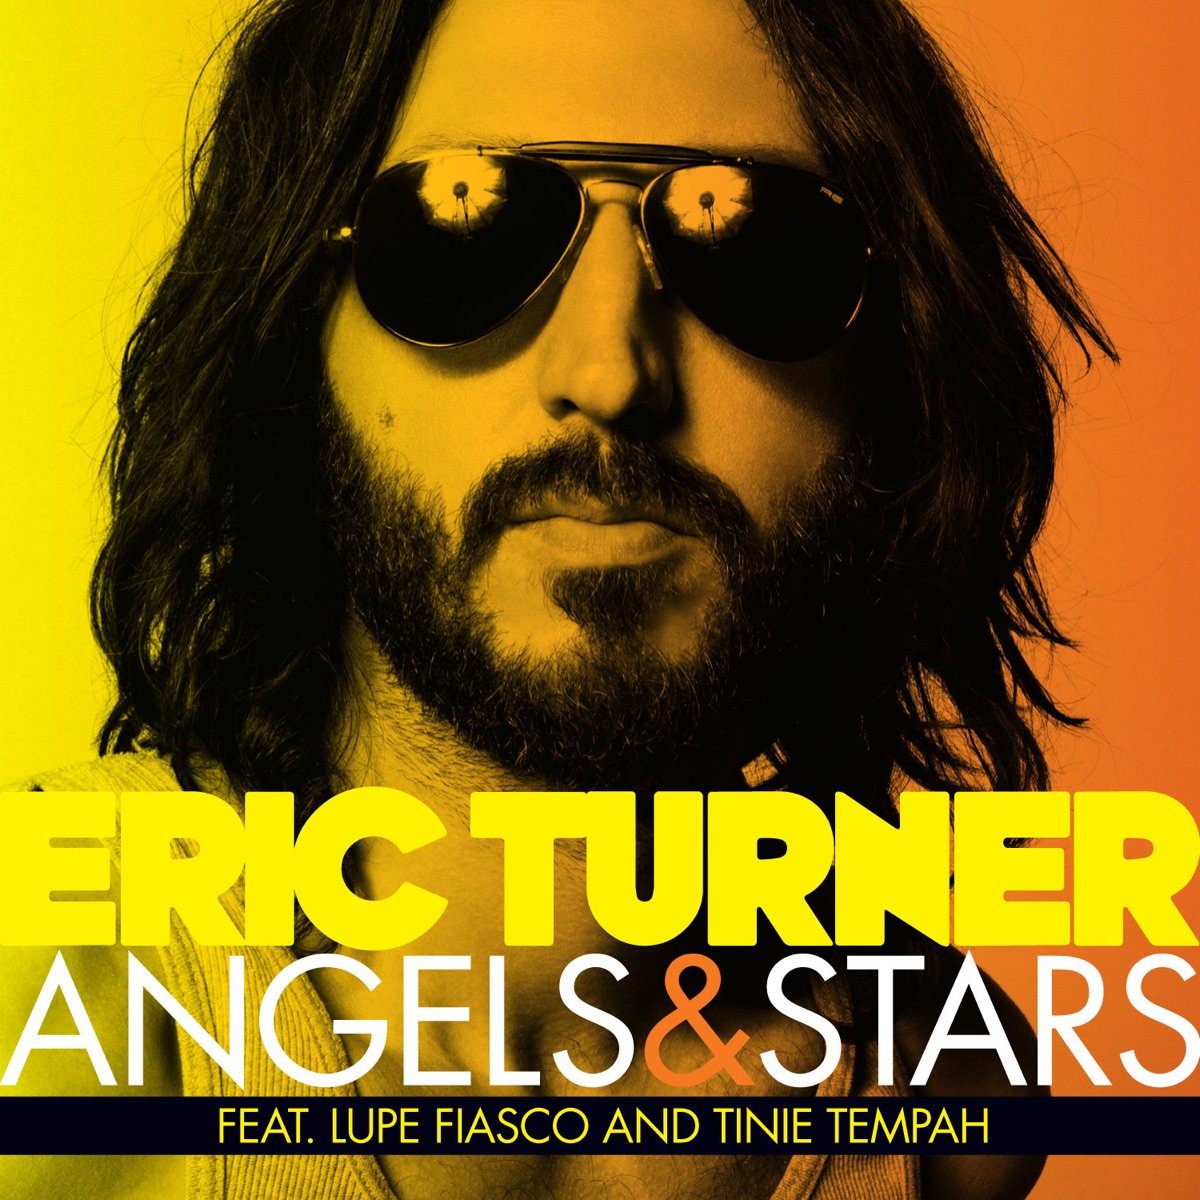 Dancing in My Head (Eric Turner vs. Avicii) - EP by Eric Turner & Avicii on  Apple Music